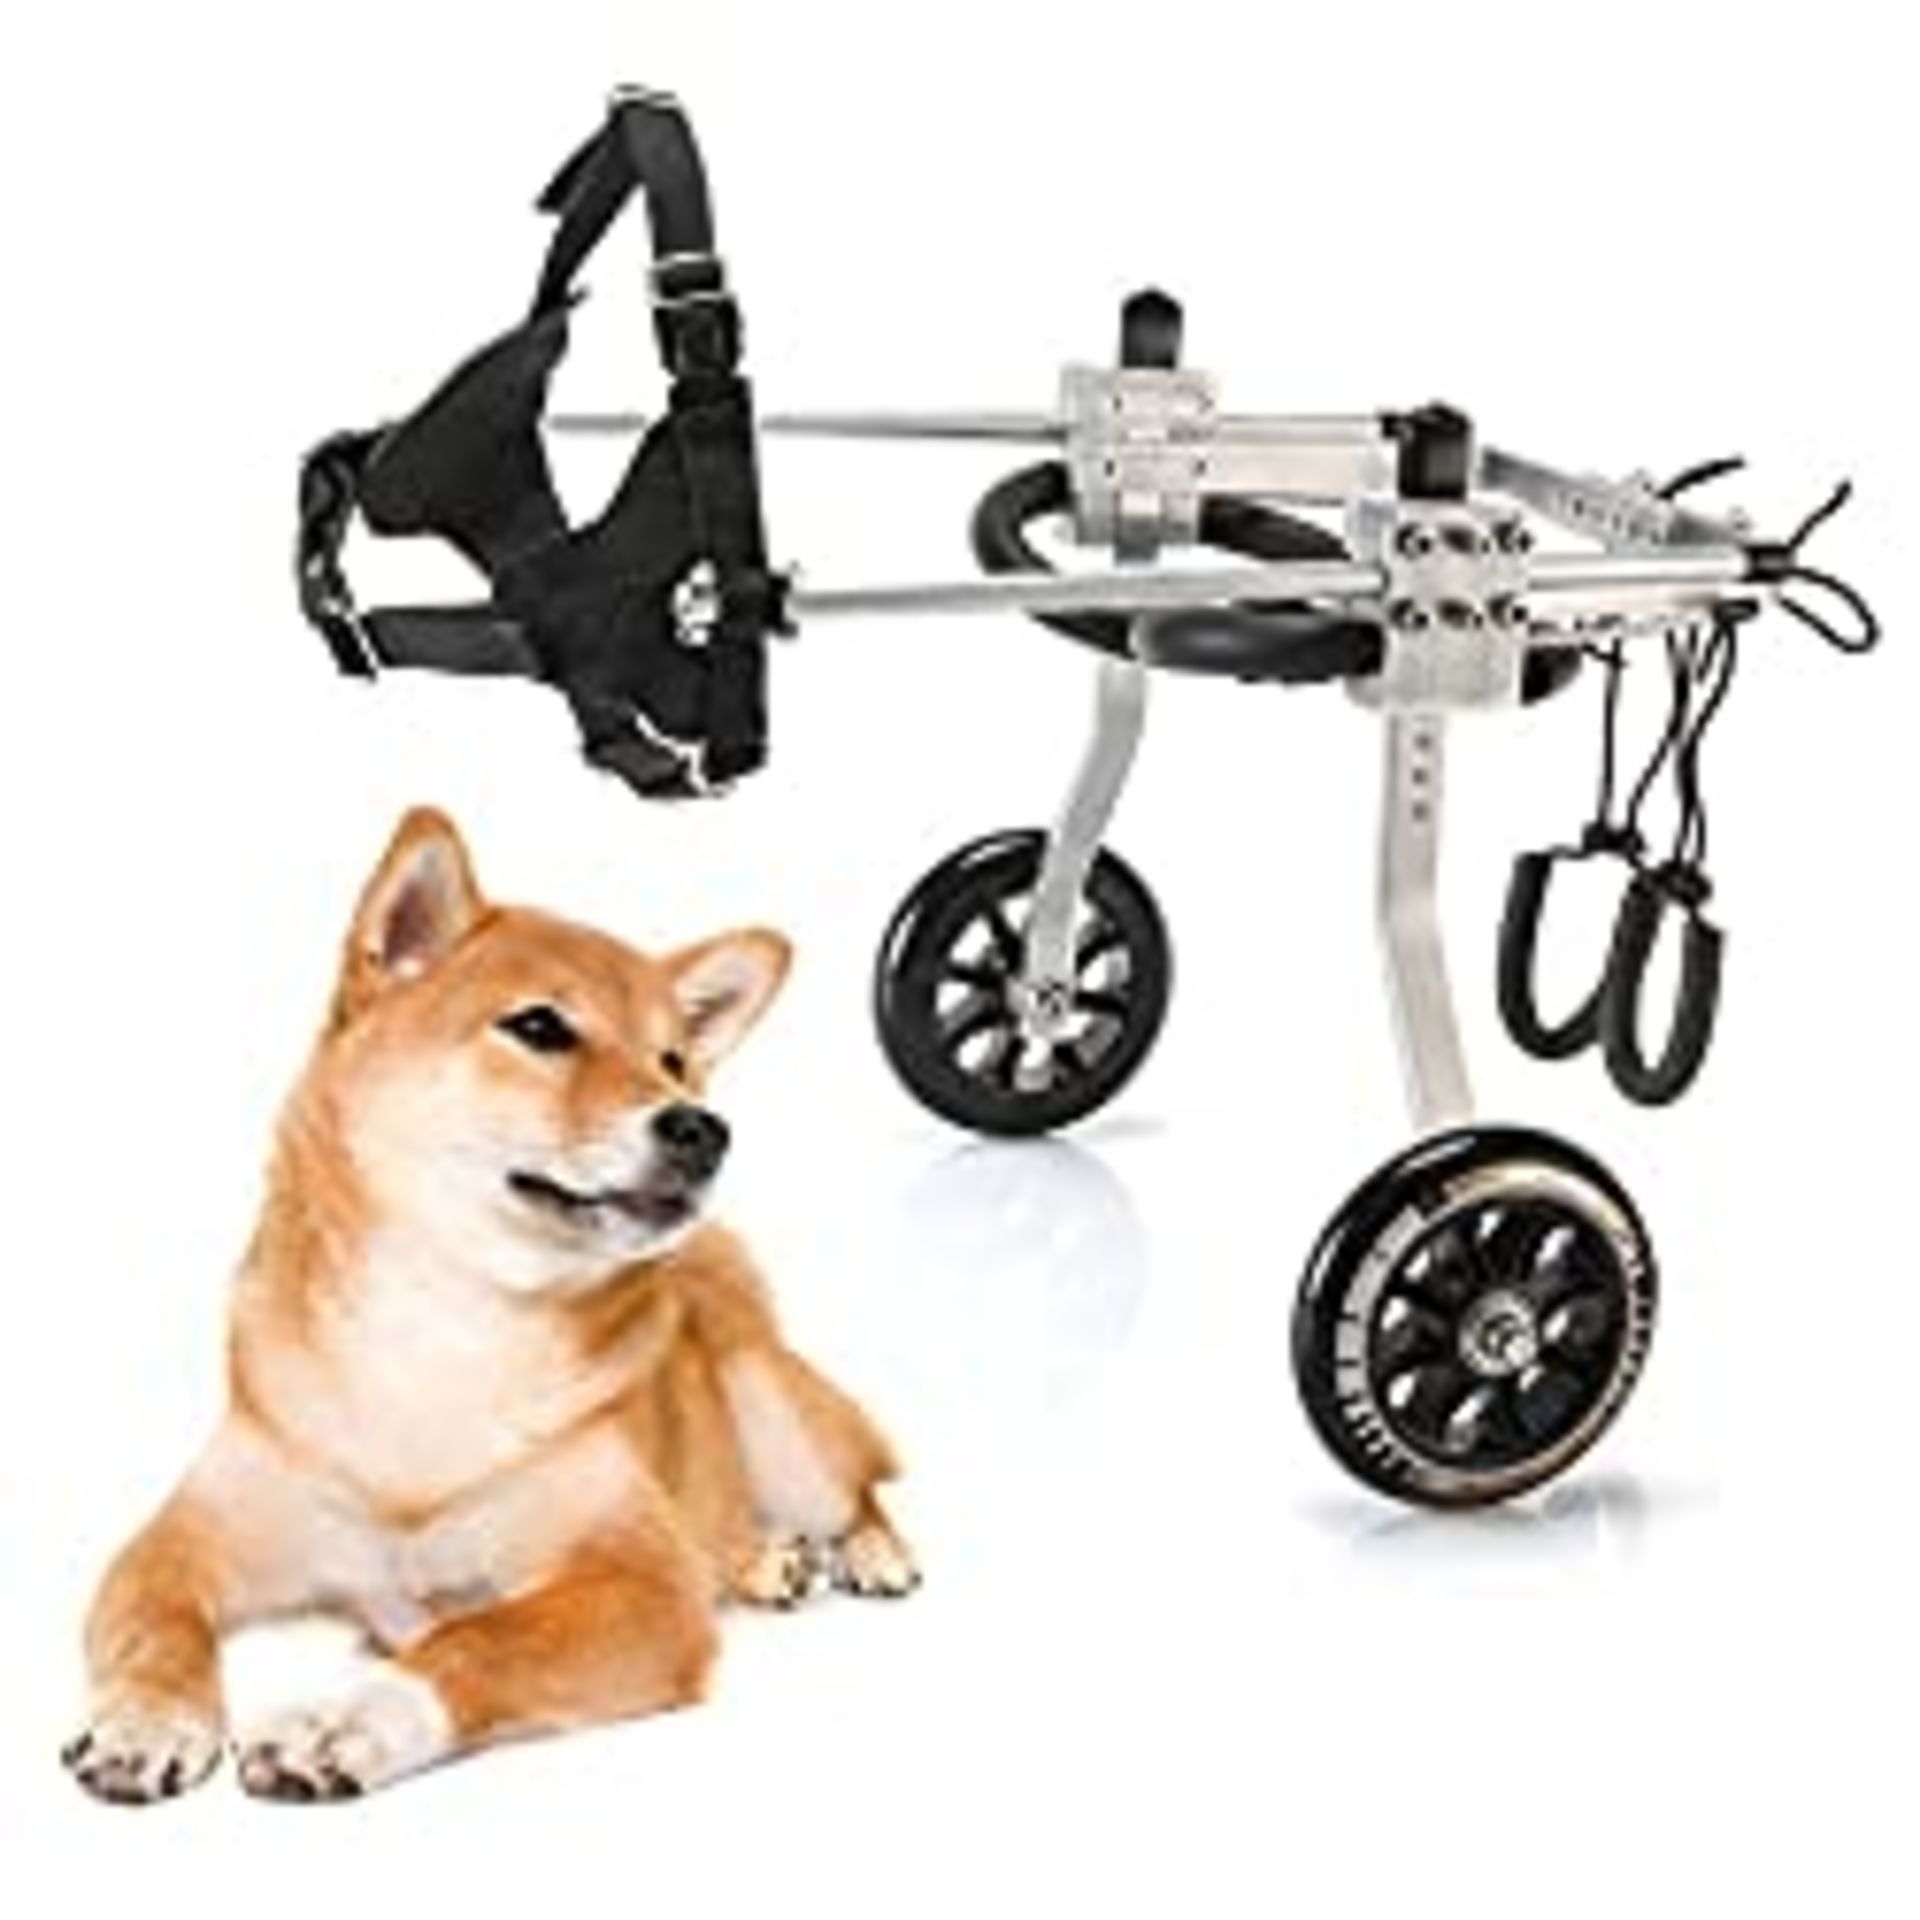 RRP £65.99 Anmas Power Dog Wheelchair Hind Legs Re